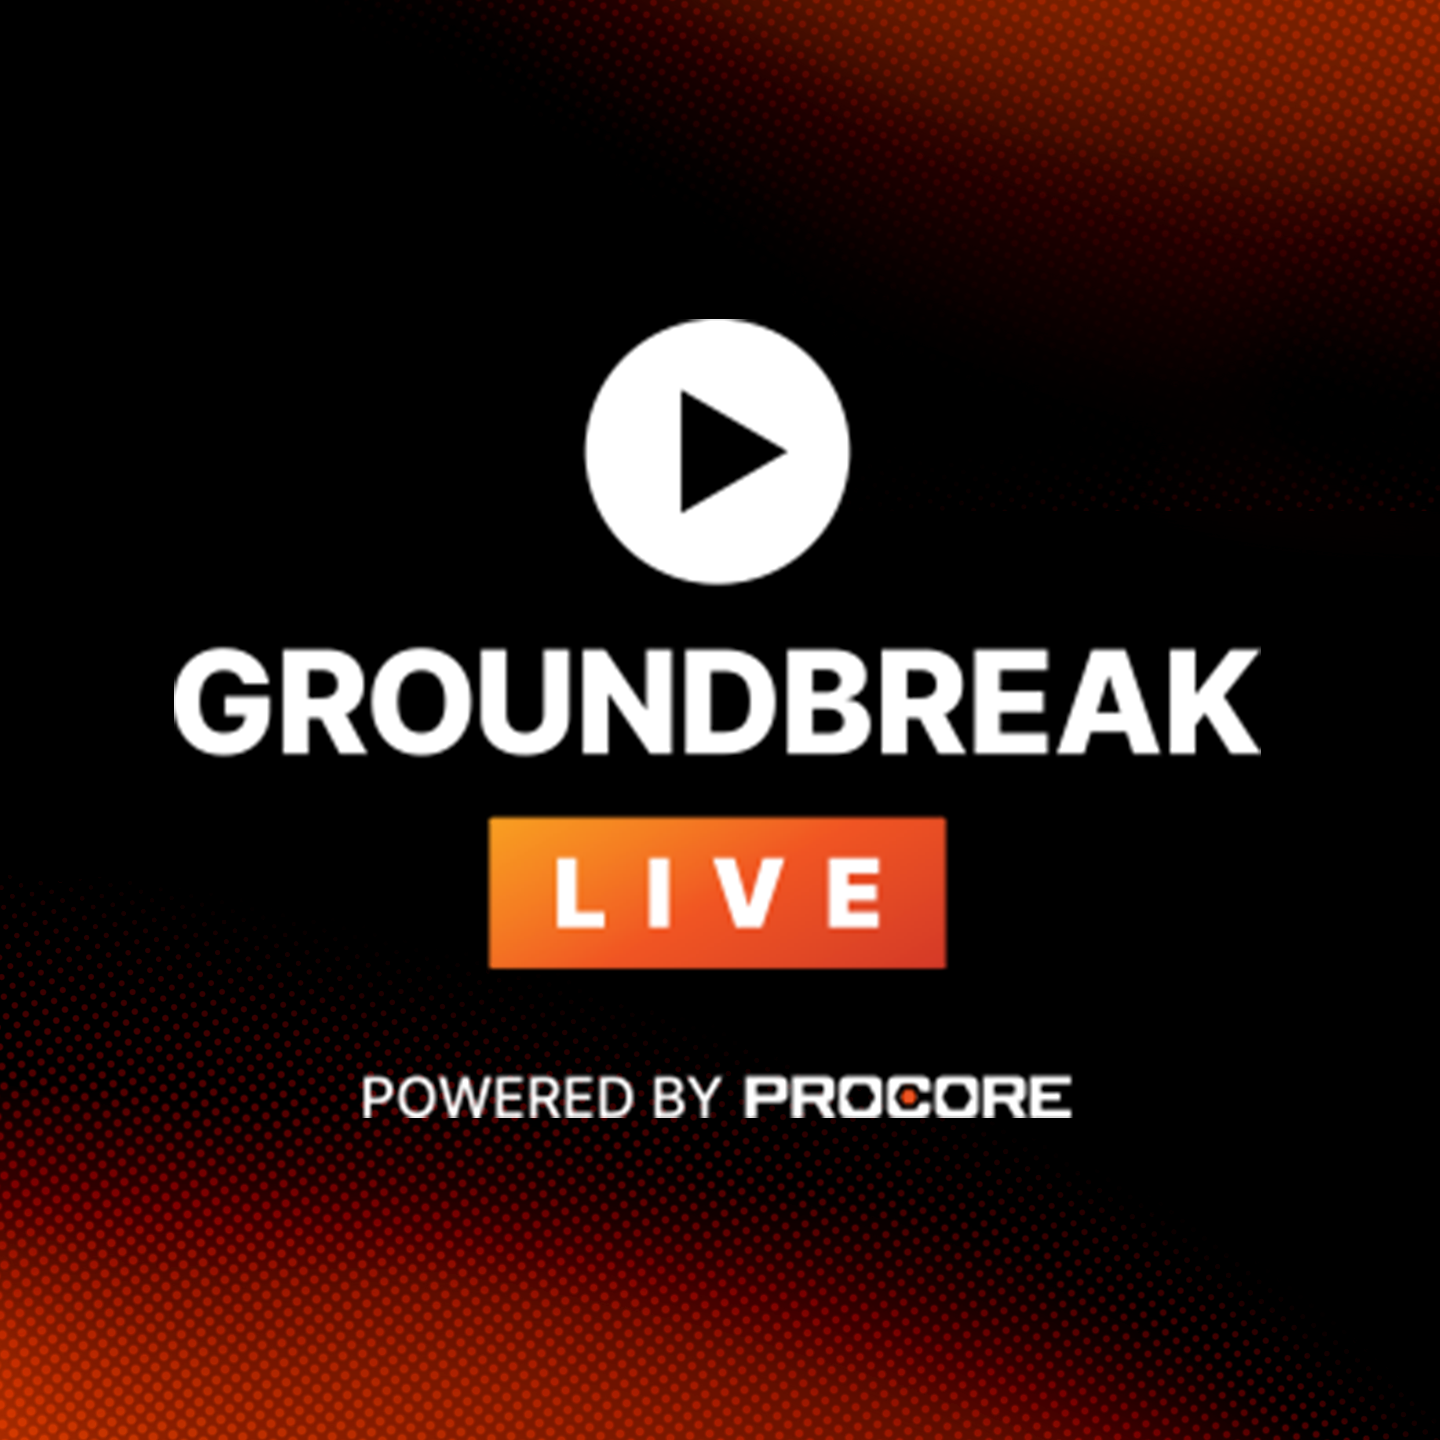 Groundbreak Live powered by Procore